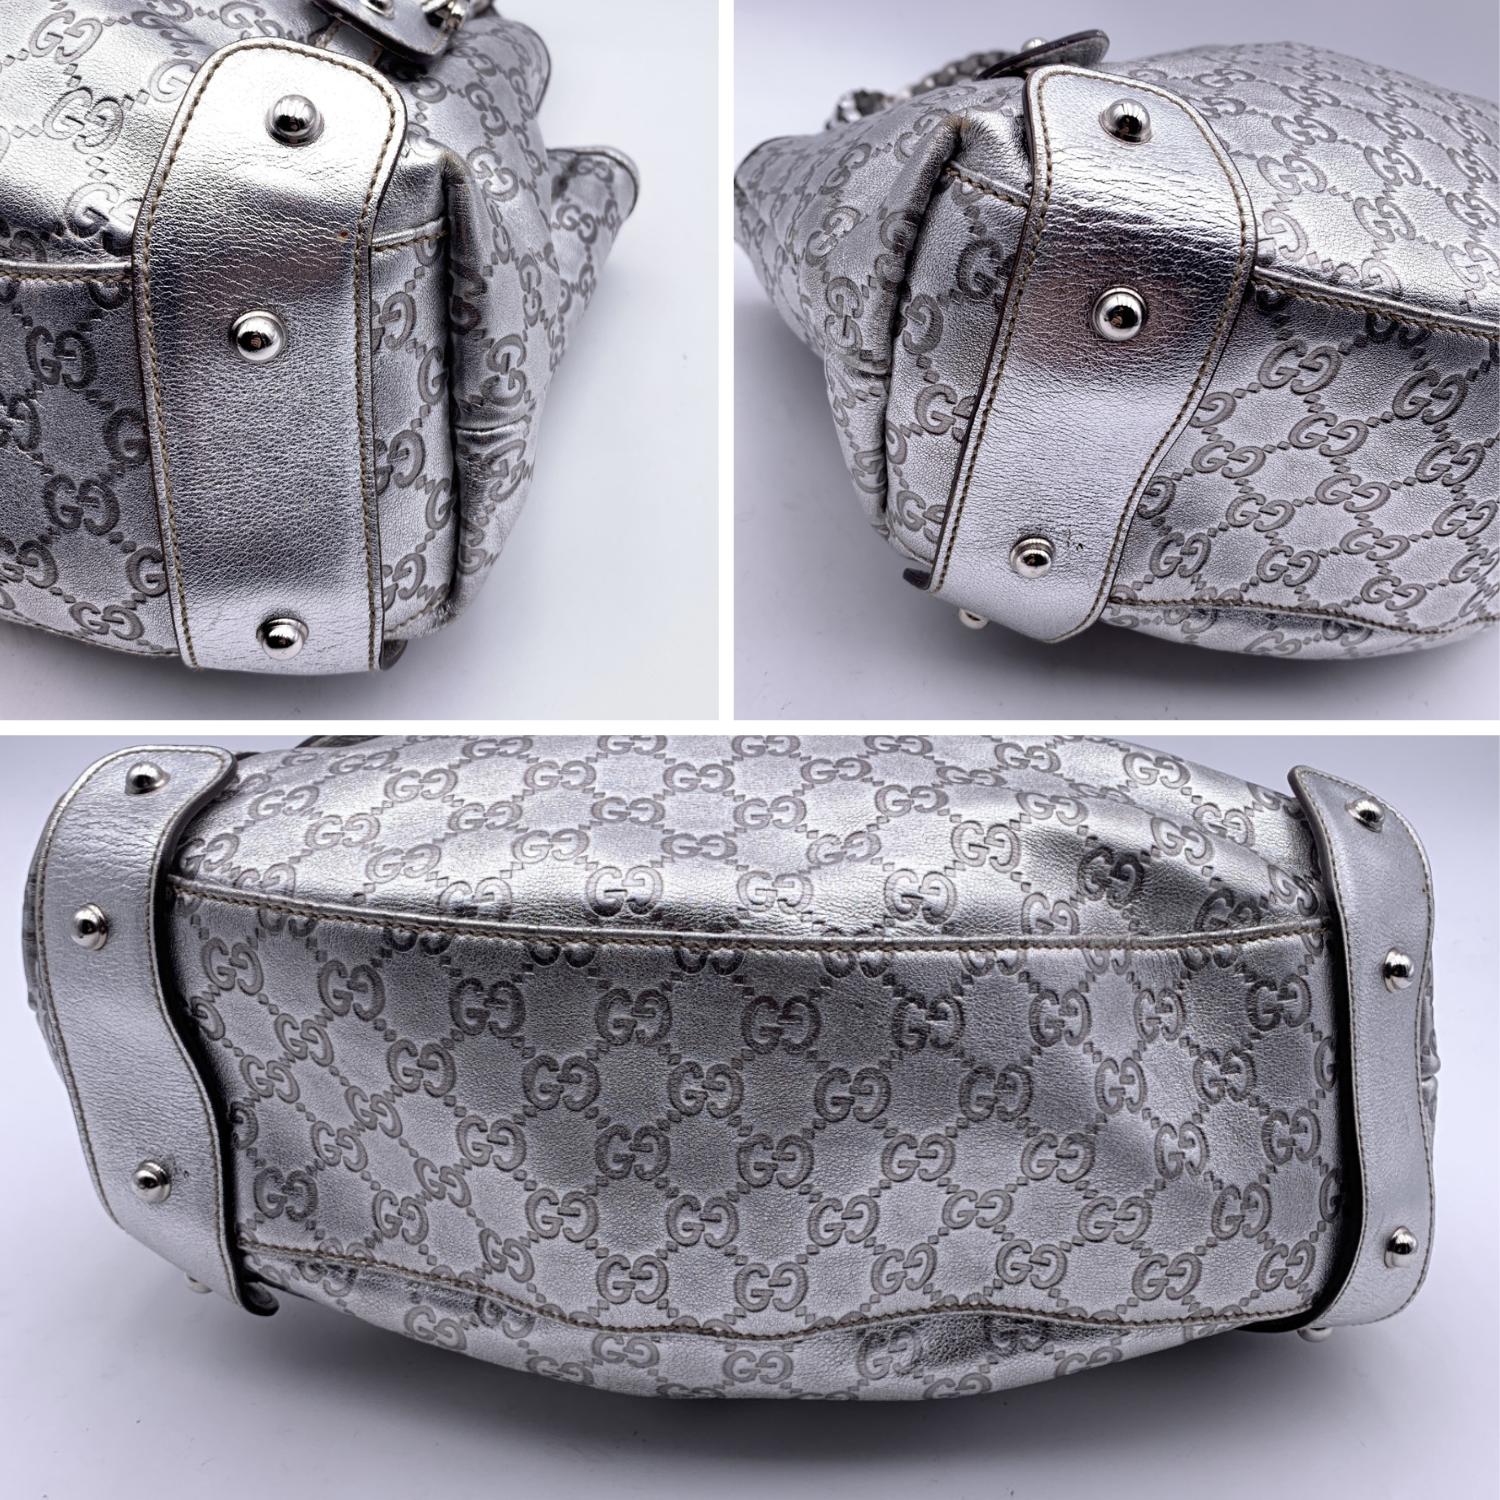 Women's Gucci Silver Monogram Leather Pelham Tote Bag with Horsebit Handbag